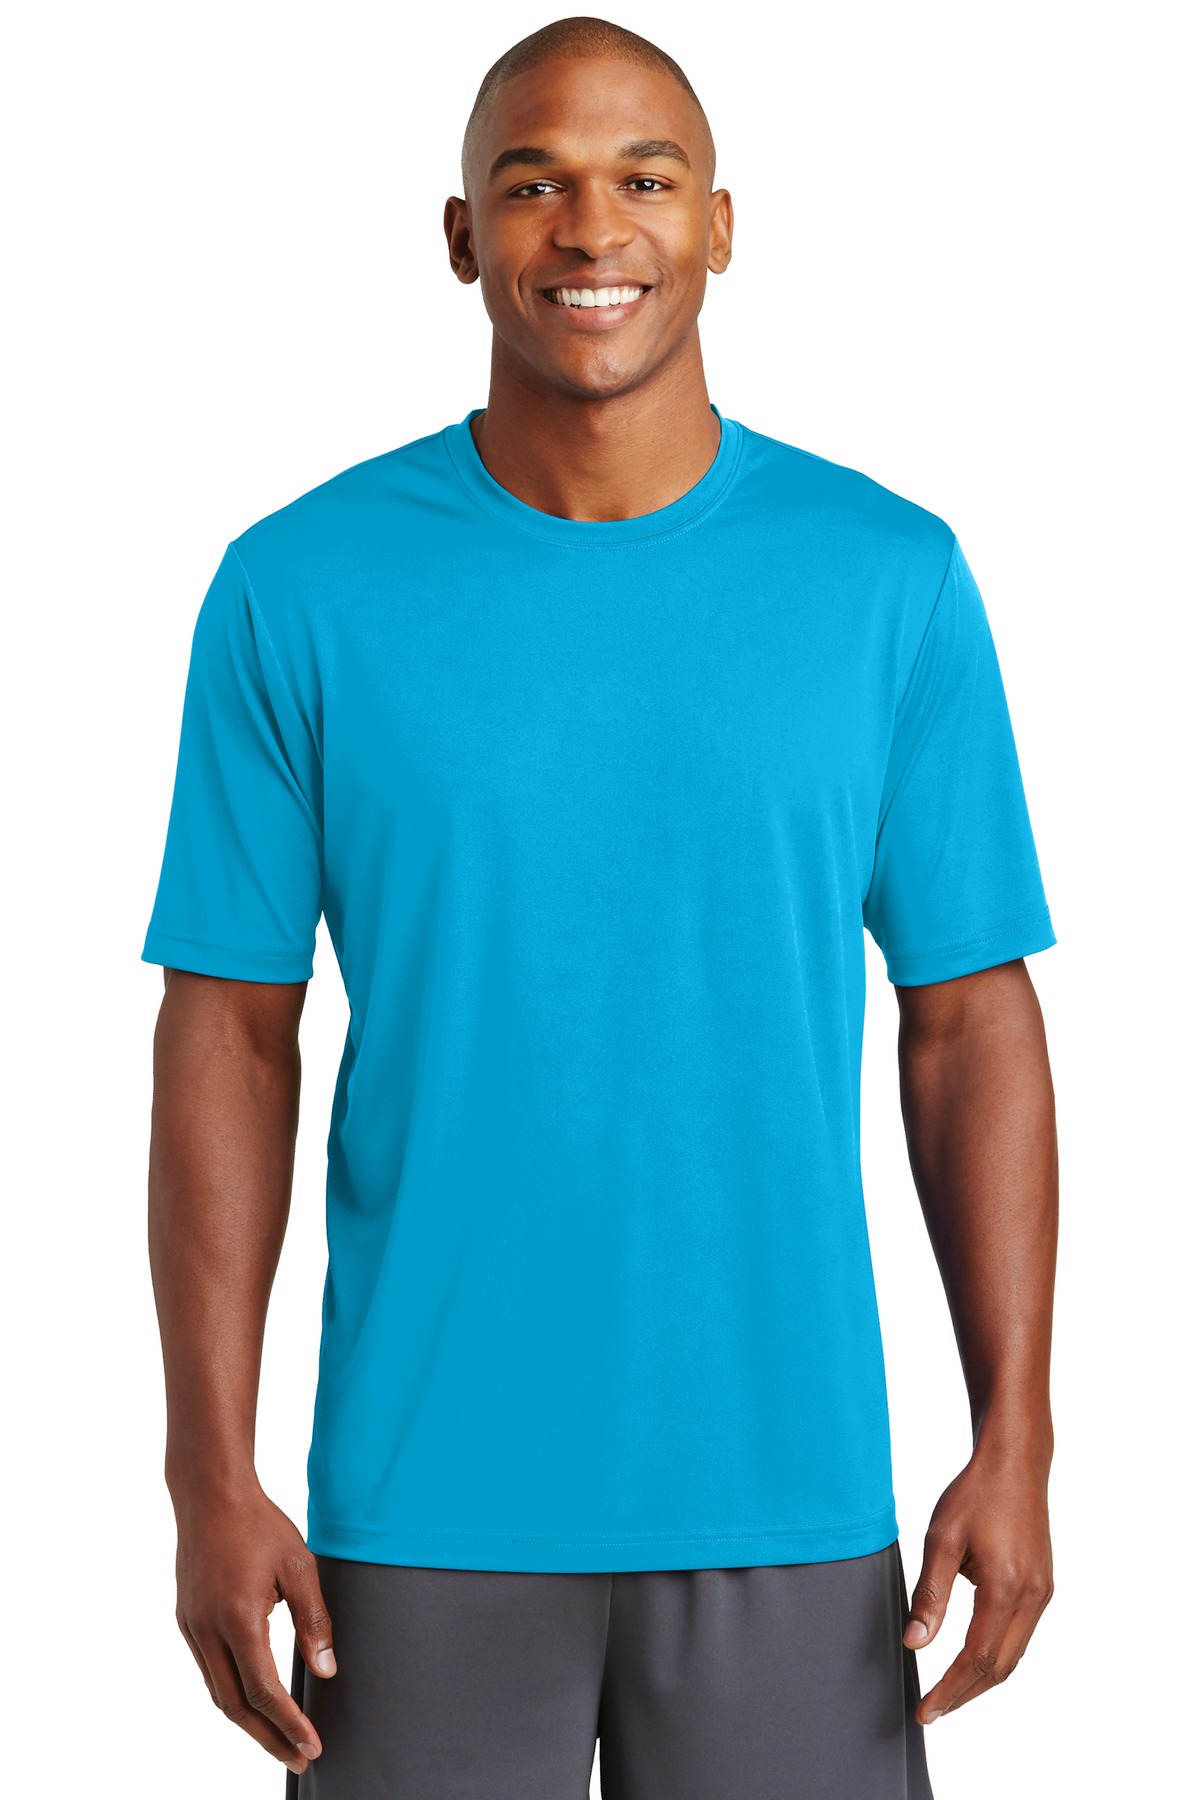 Sport-Tek Activewear T-Shirts for Hospitality ® PosiCharge® Tough Tee.-Sport-Tek